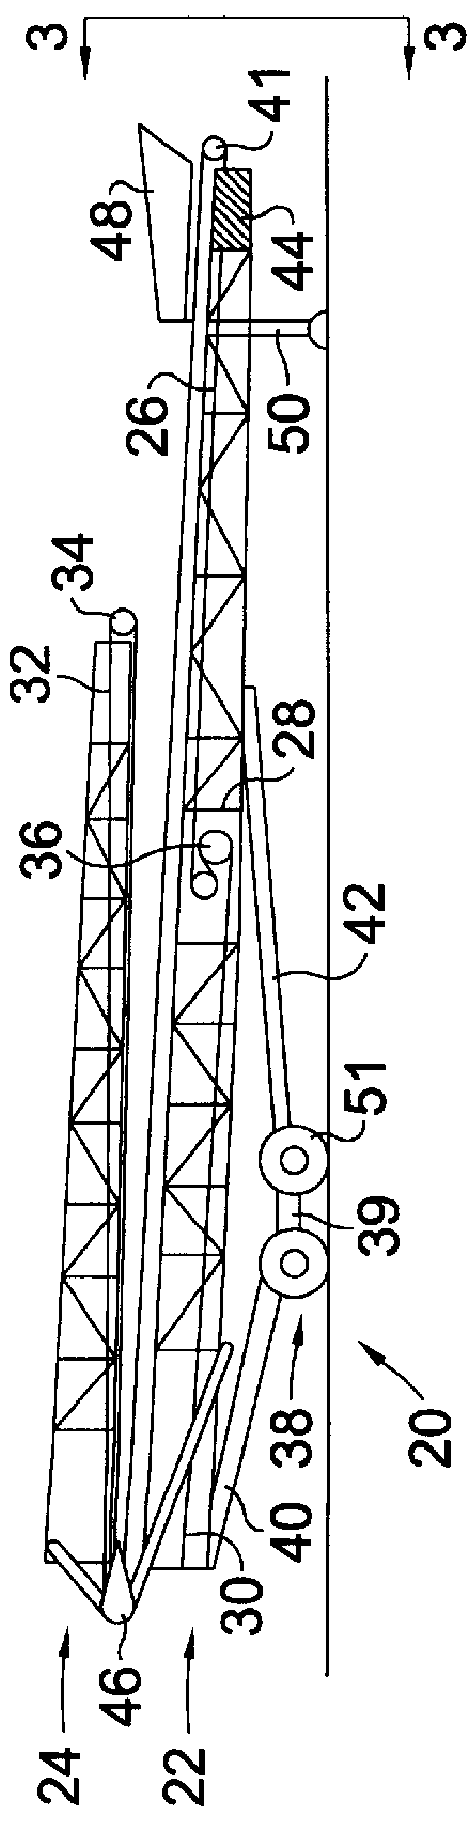 Counterbalanced mono-fold stockpiling trailer conveyor